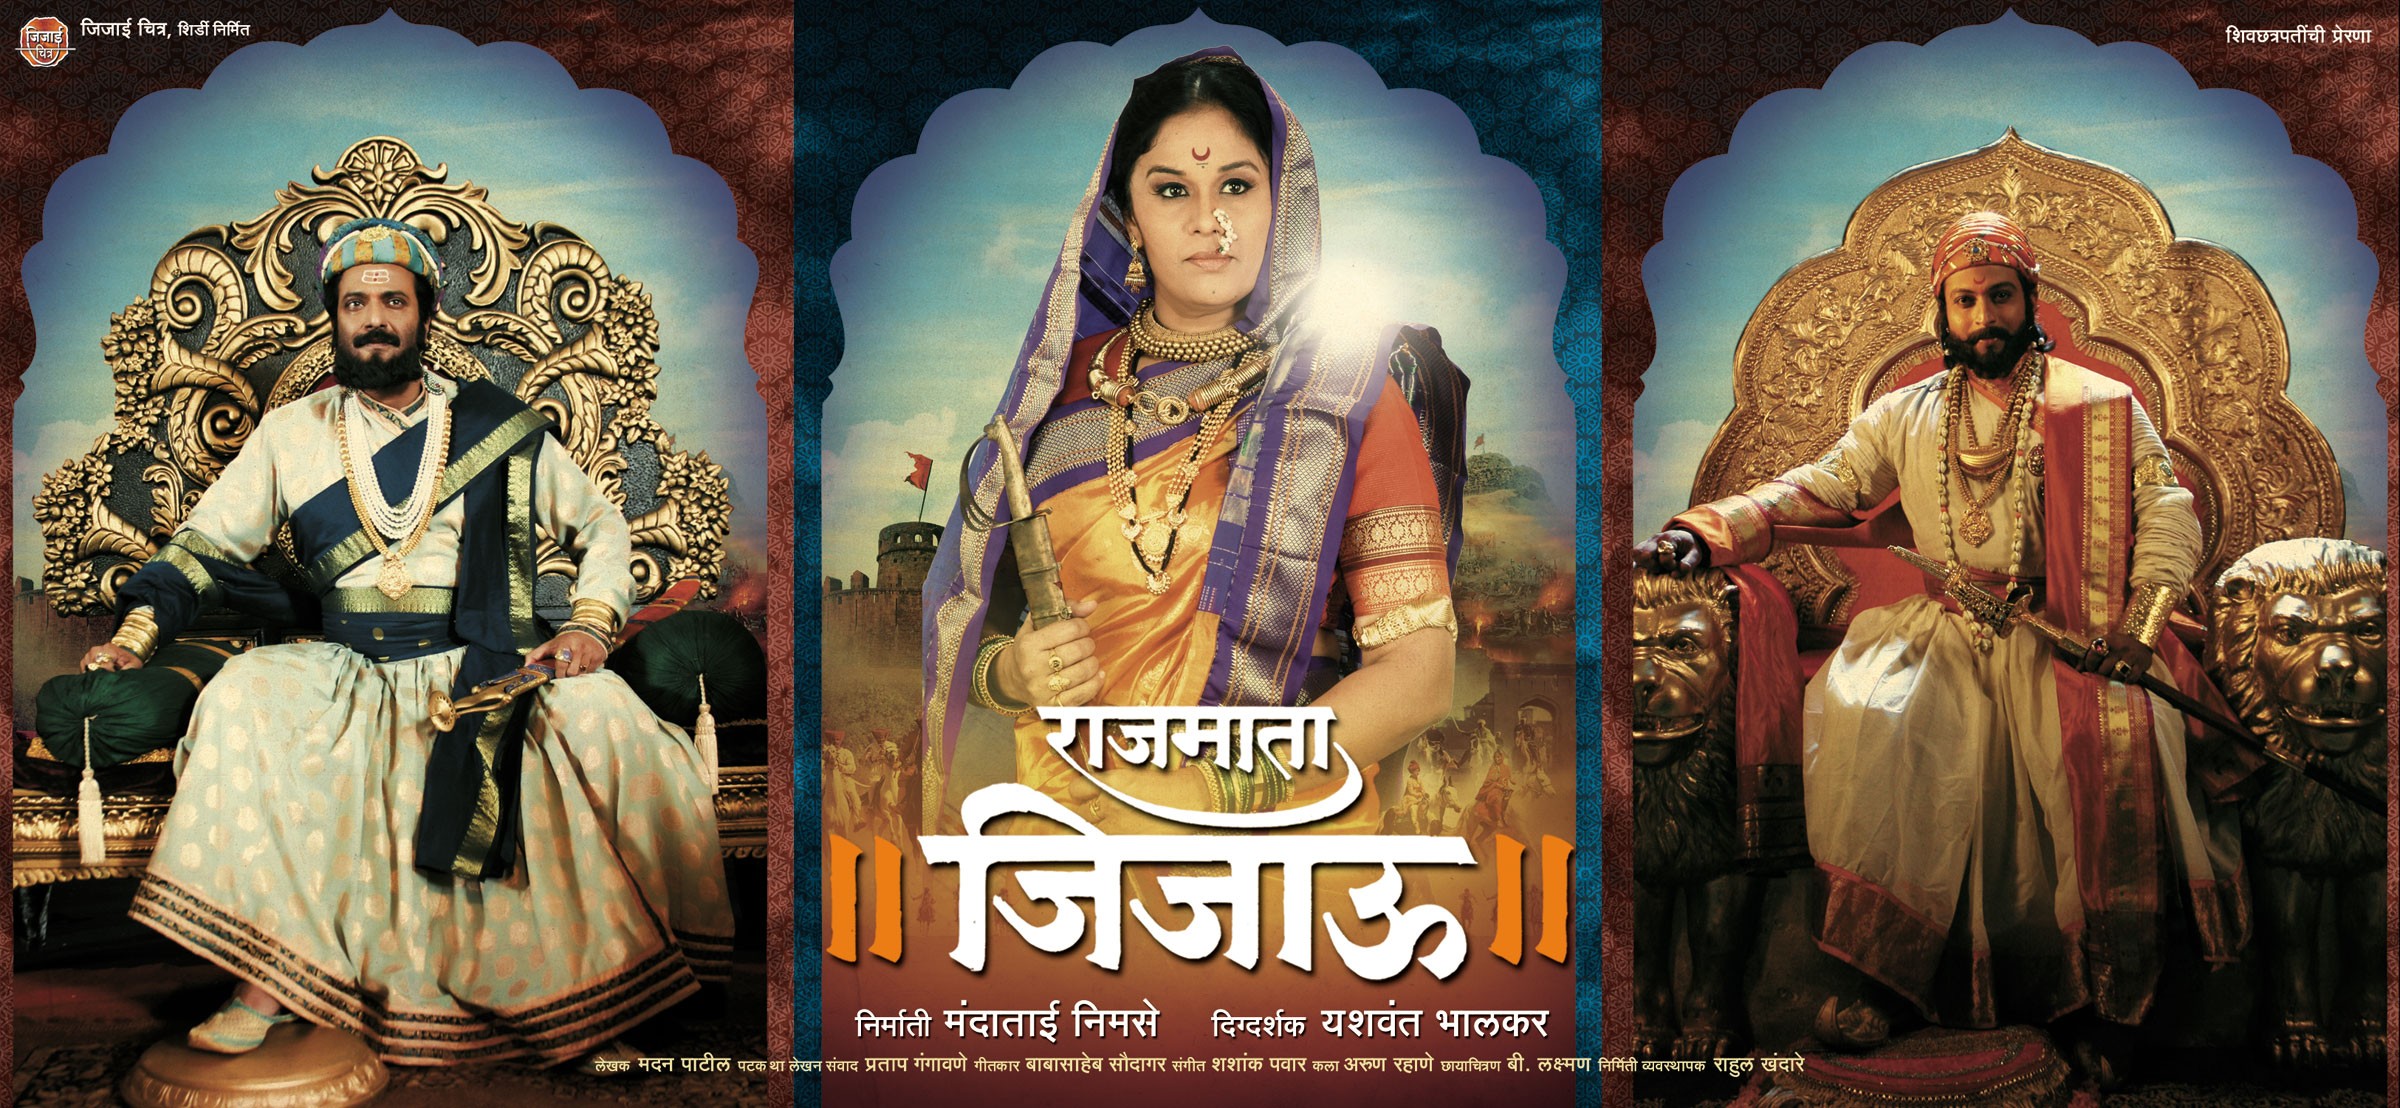 Mega Sized Movie Poster Image for Rajmata Jijau (#5 of 5)